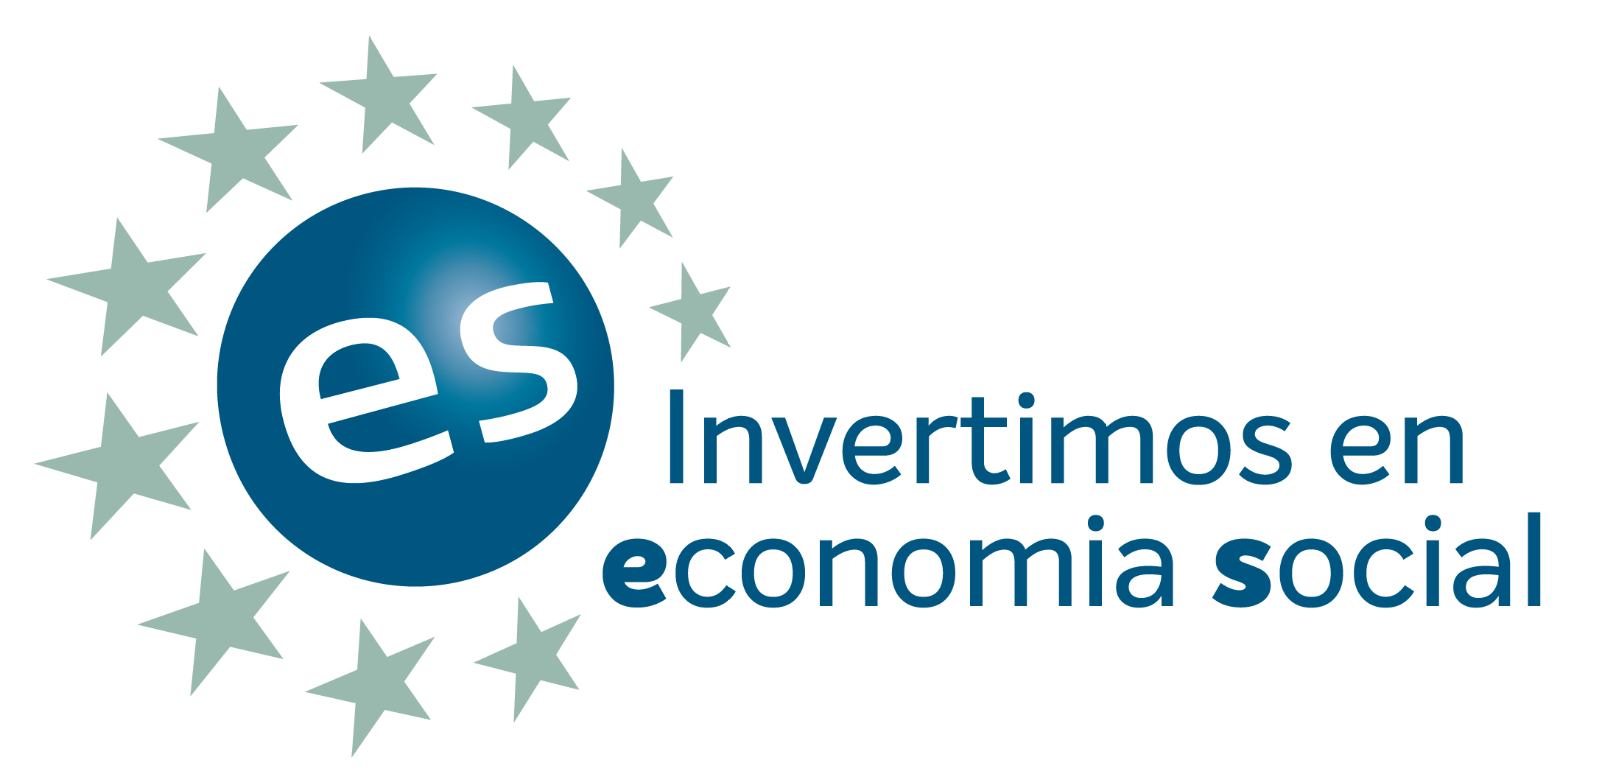 CEPES publica dos convocatorias de ayudas del Fondo Social Europeo con valor de 19,2 millones de euros